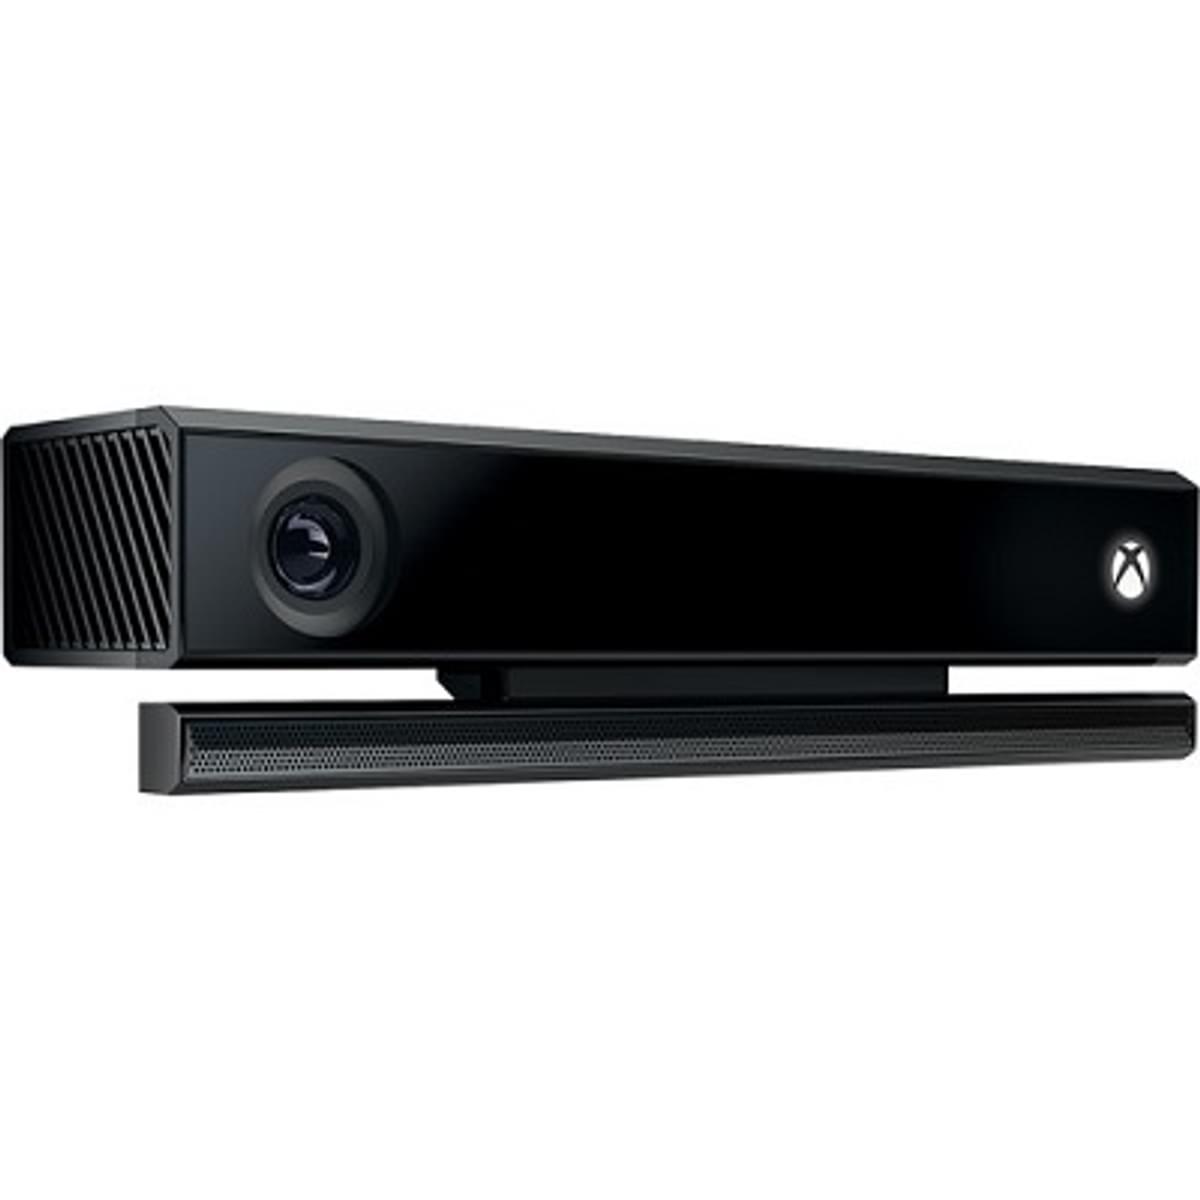 Microsoft trekt stekker uit Kinect image